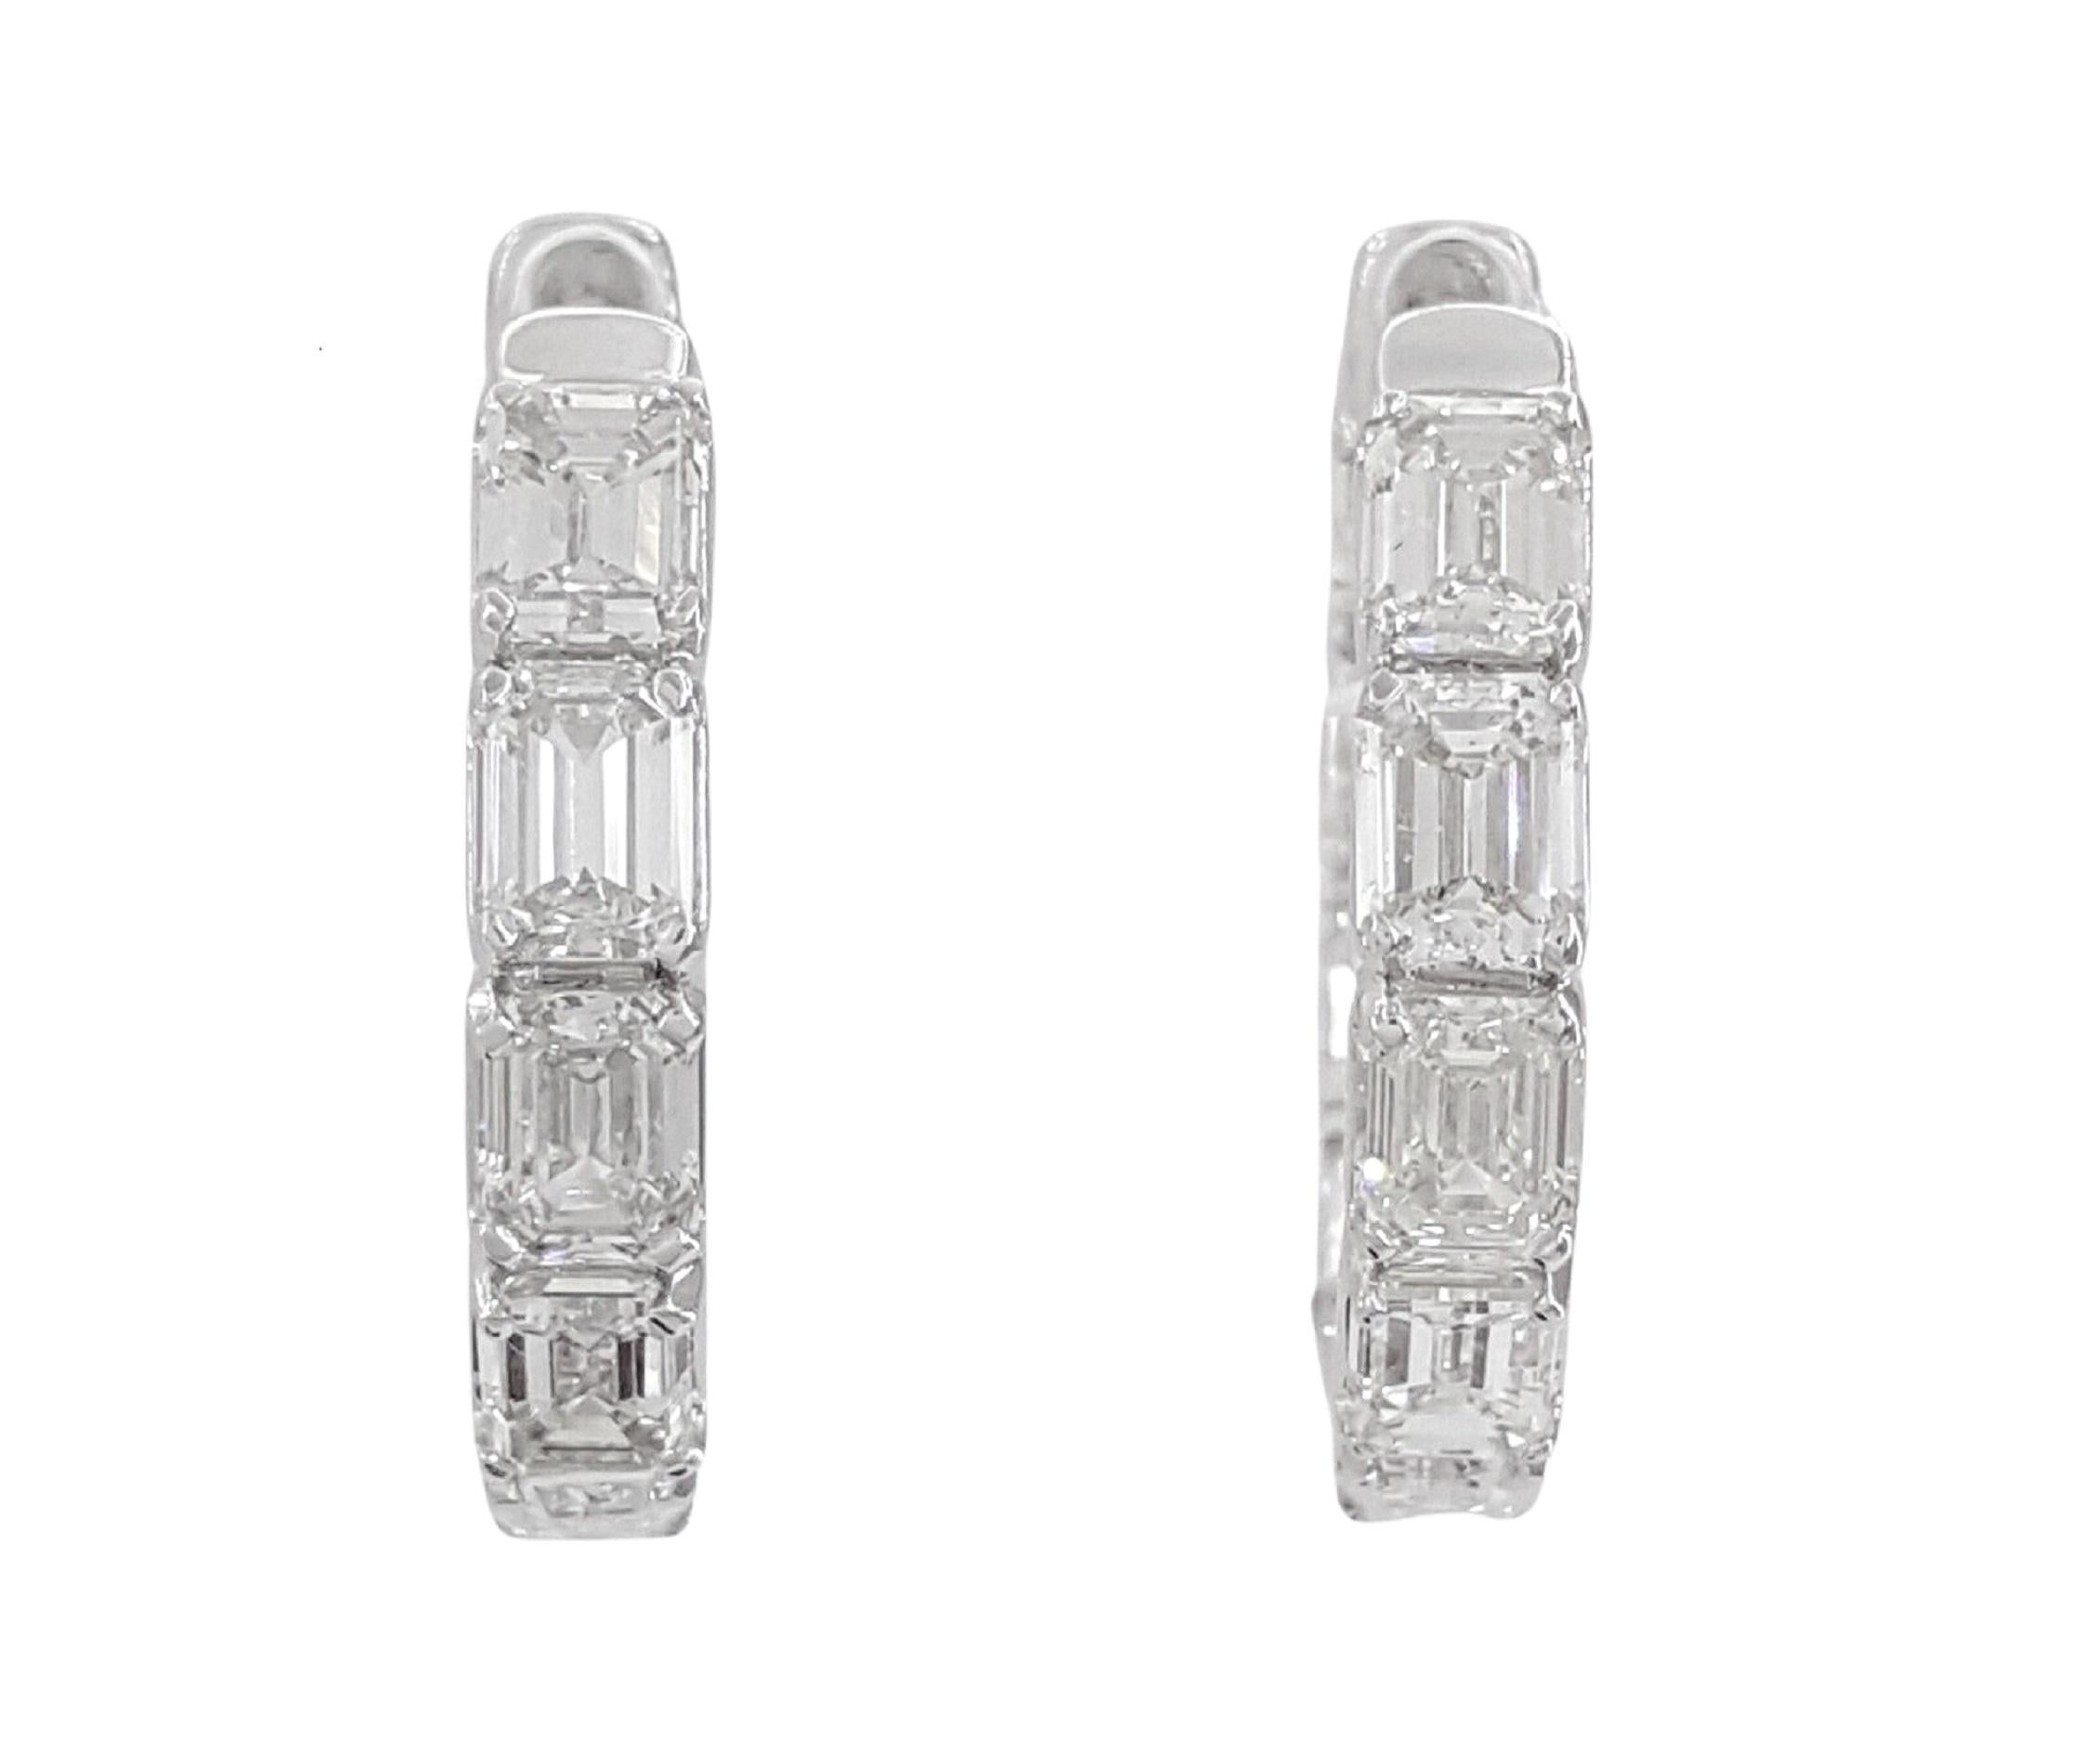 Modern 5 Carat Emerald Cut Diamond Earrings Set in White Gold For Sale